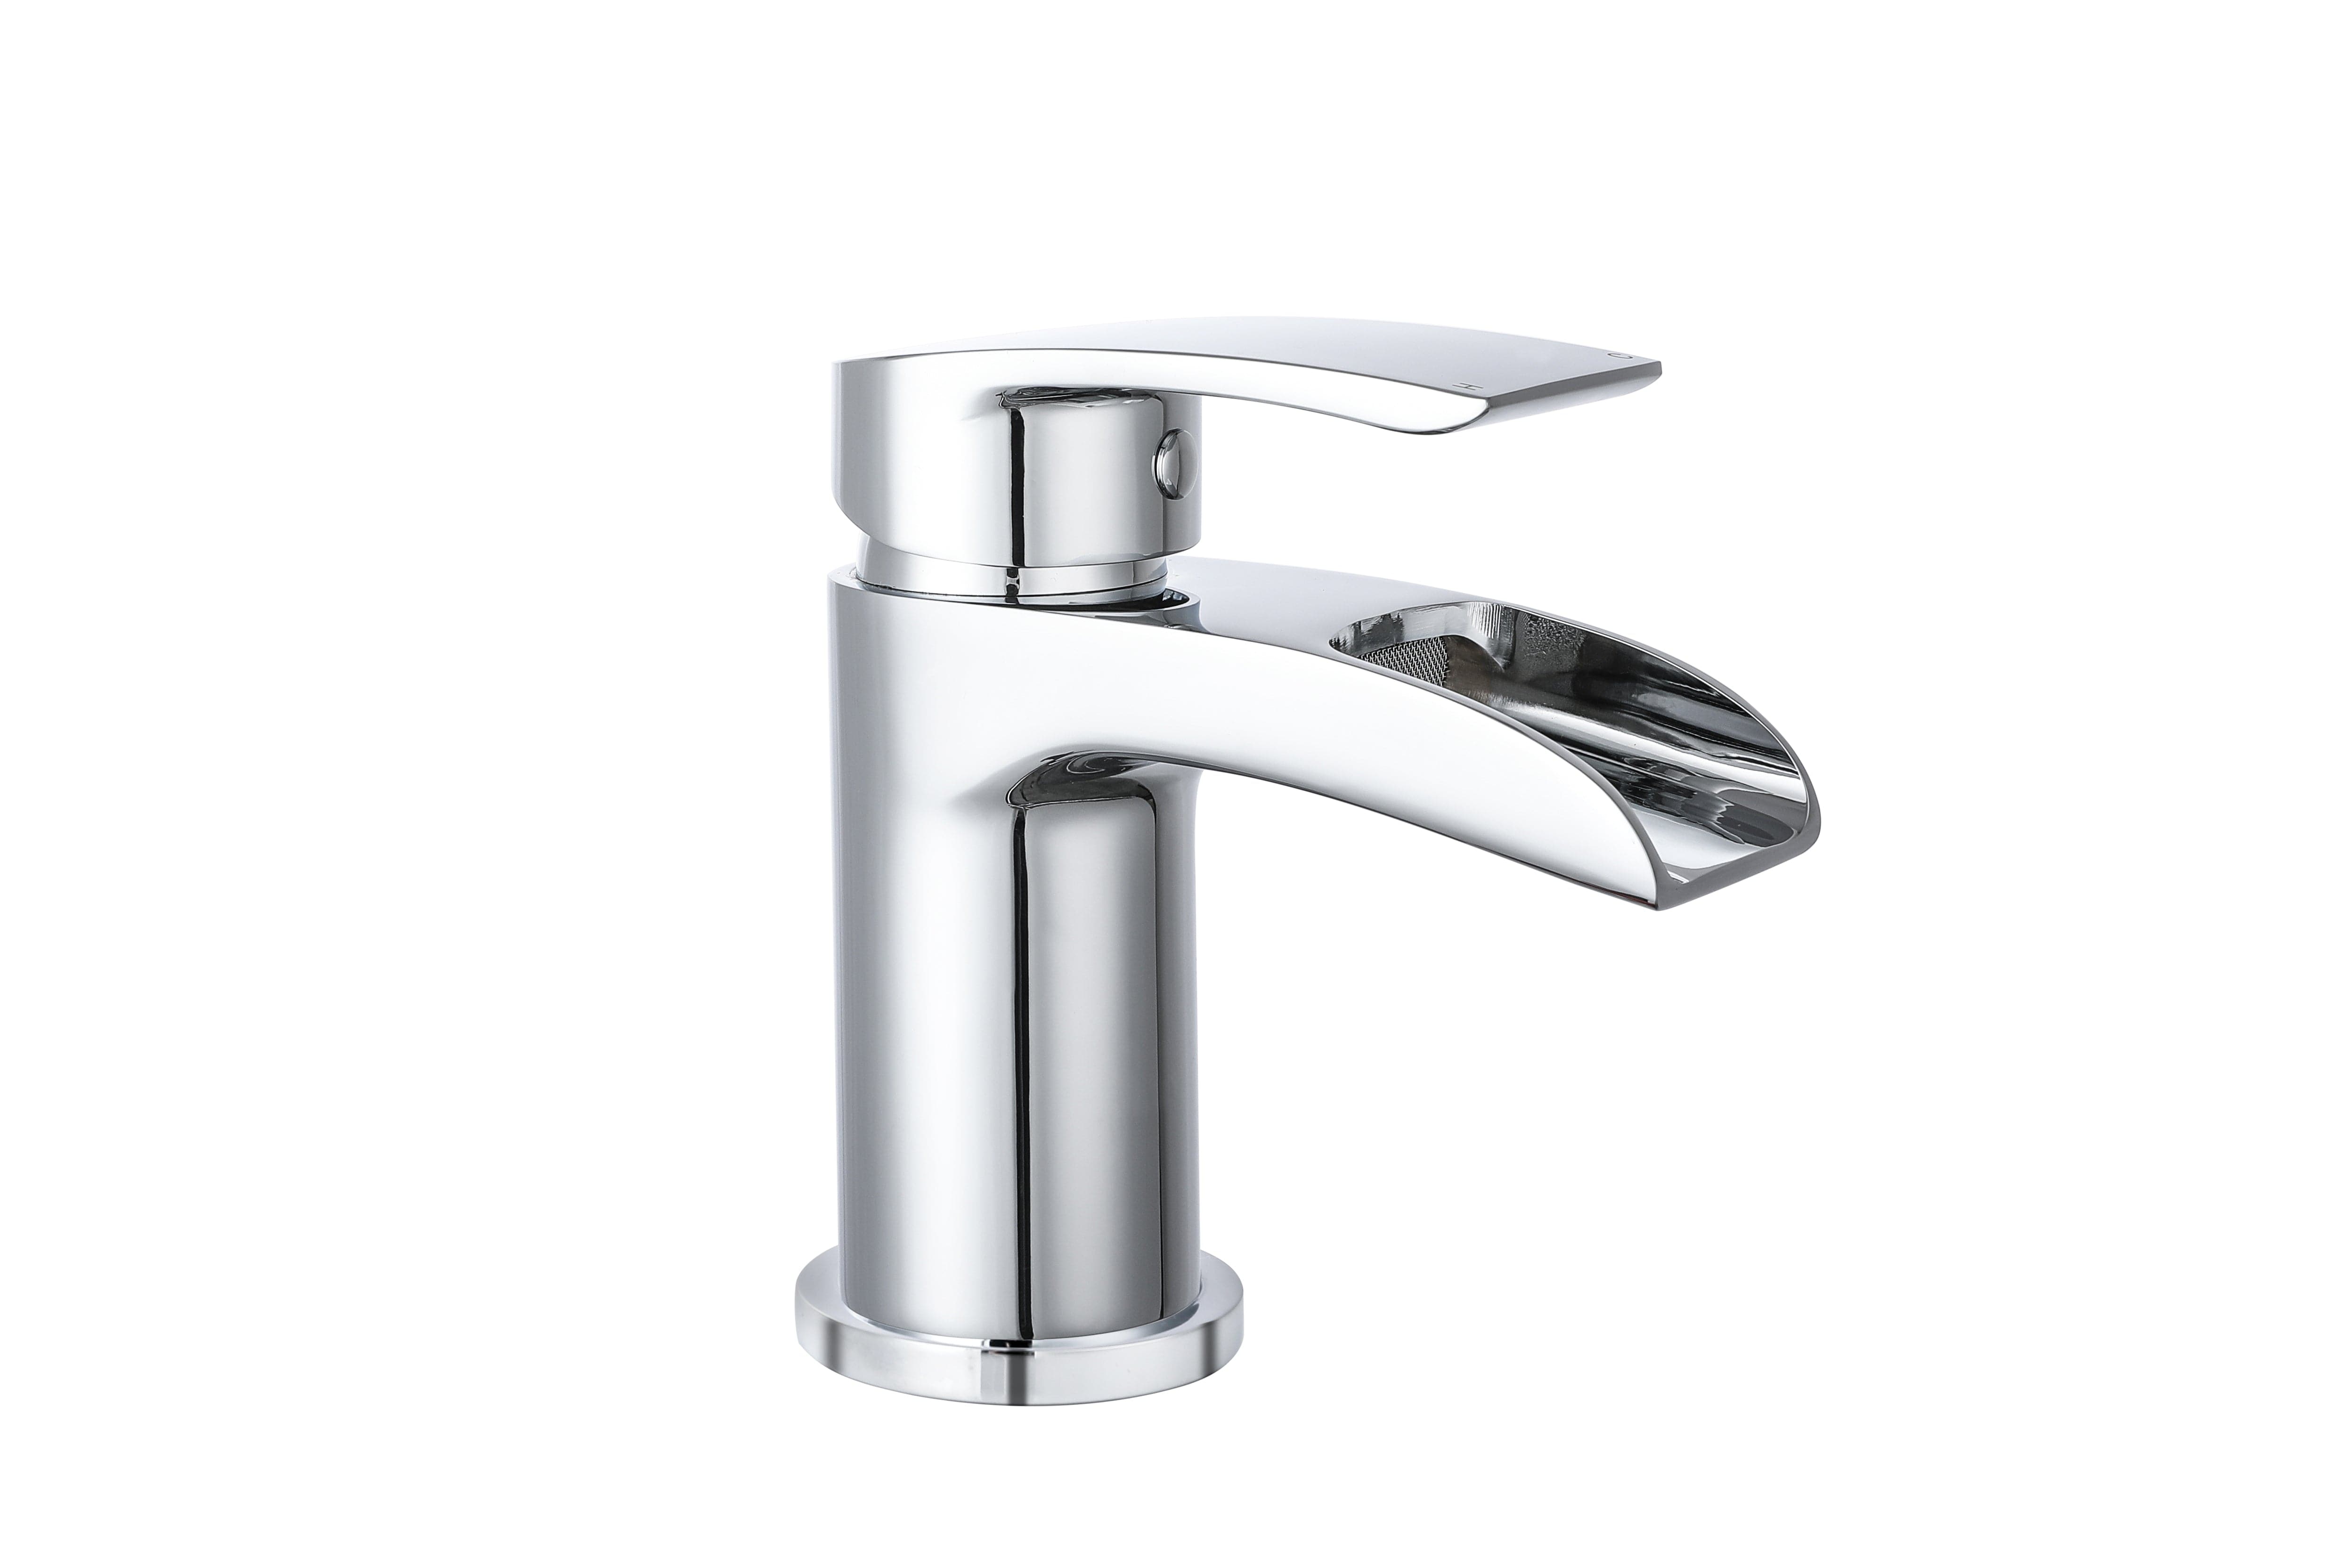 Trace Bath Filler Mixer Tap - Matt Black, sleek design for modern bathrooms, UK quality taps, buy online.